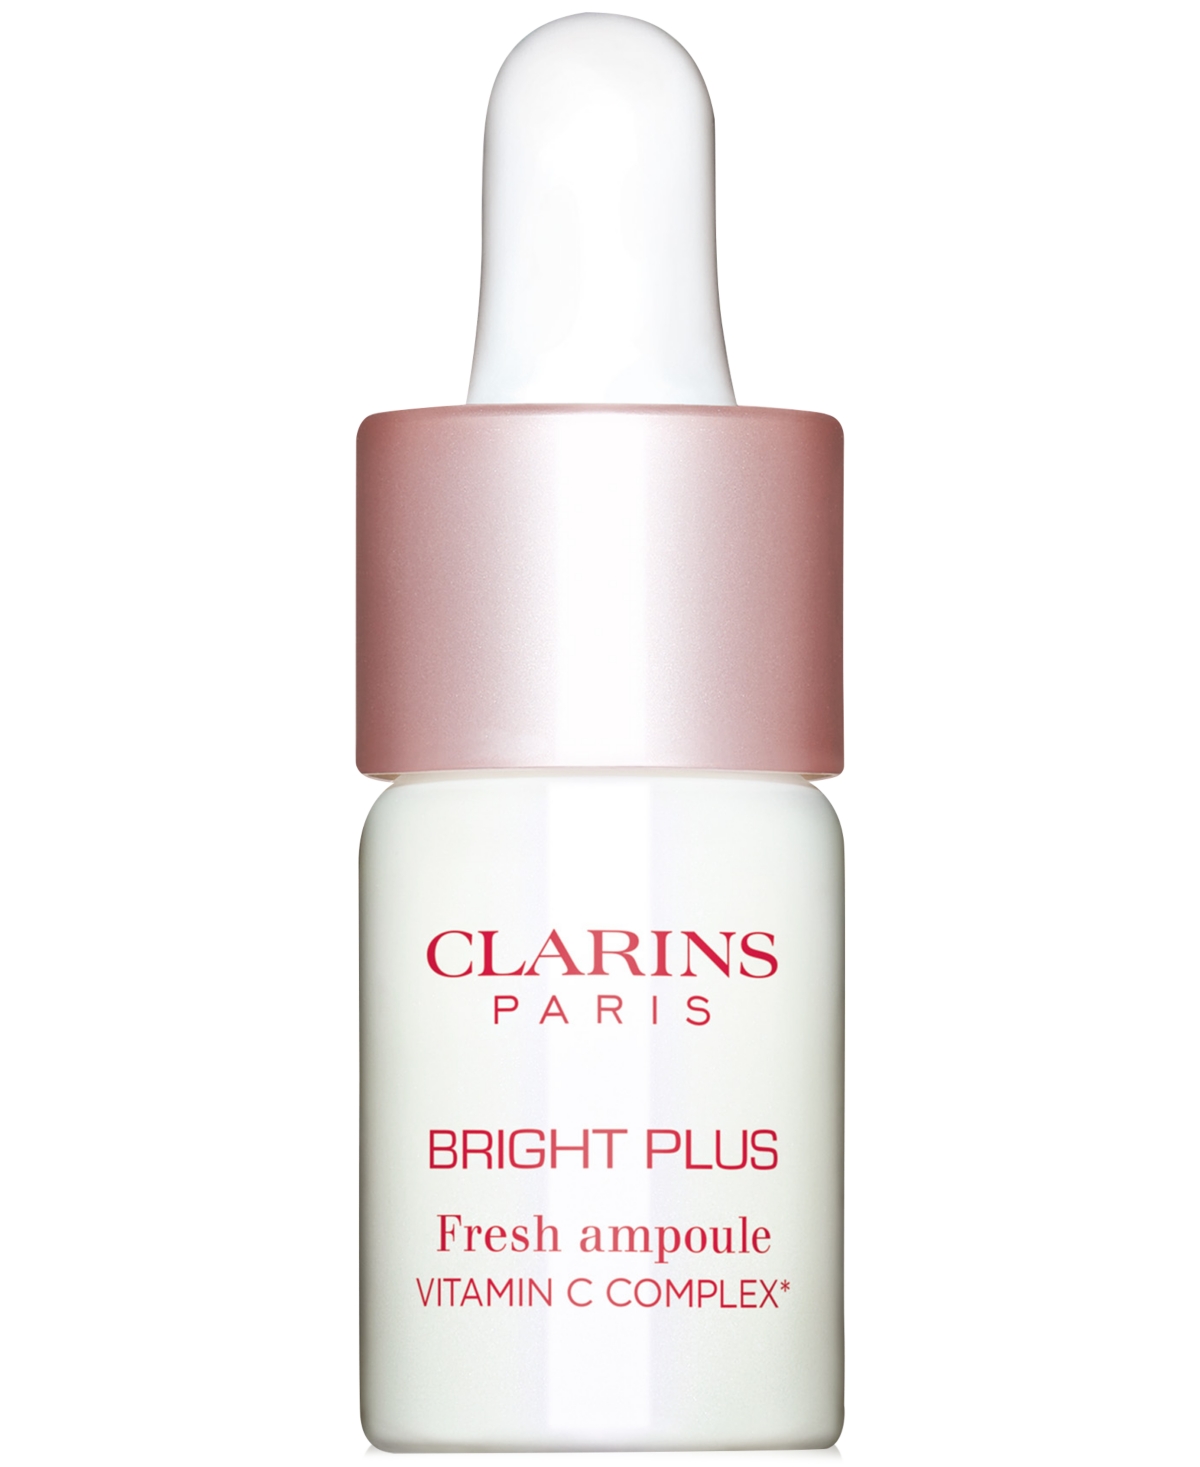 Clarins Bright Plus Fresh Ampoule Vitamin C Complex, 0.2 oz.